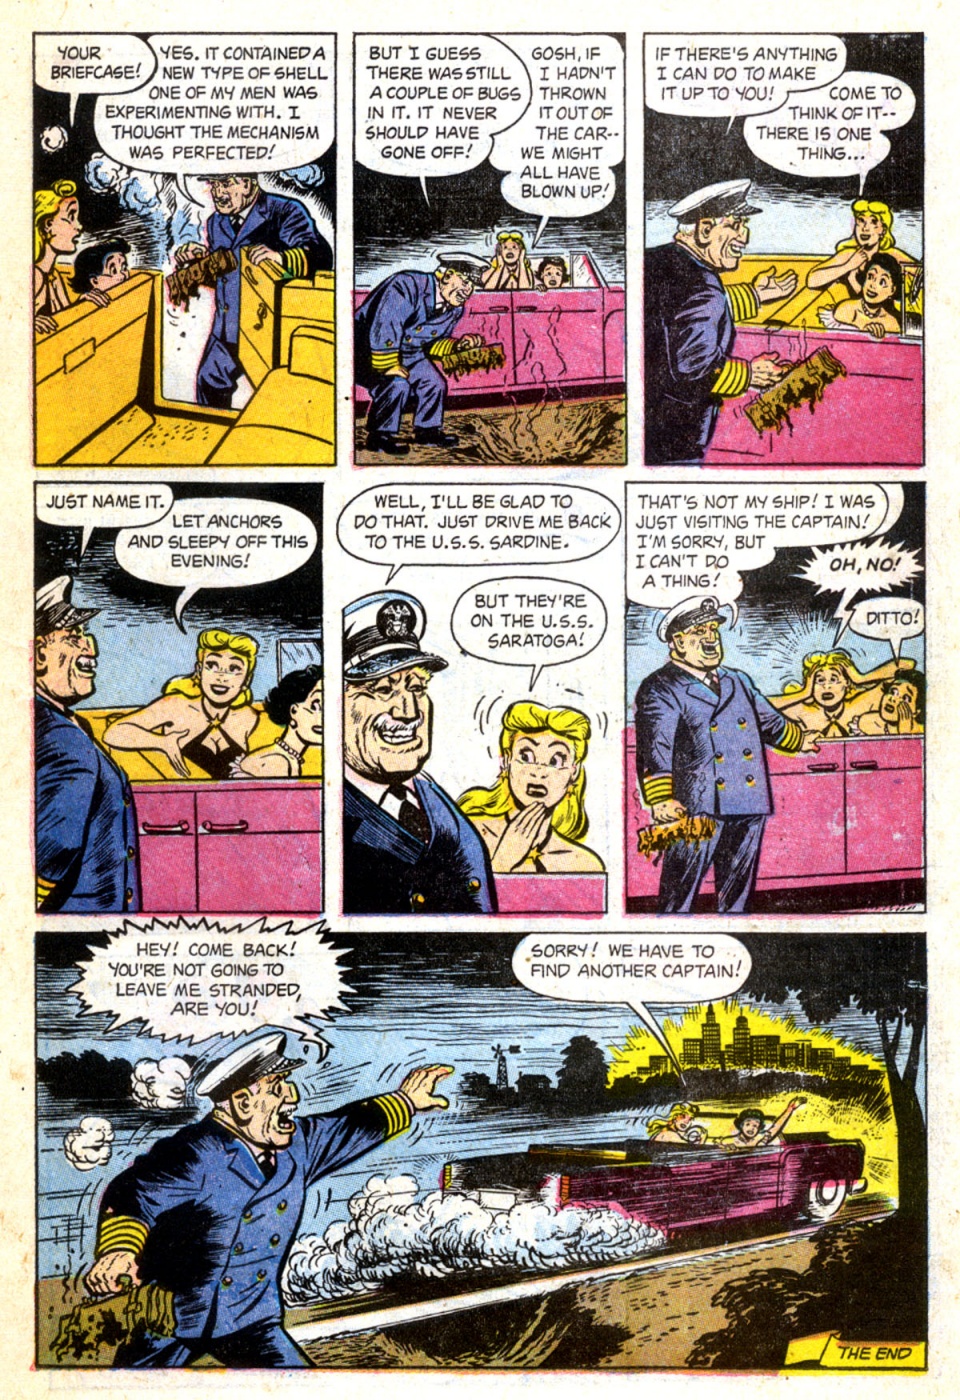 Anchors the Salt Water Daffy - Comics (c) (13)